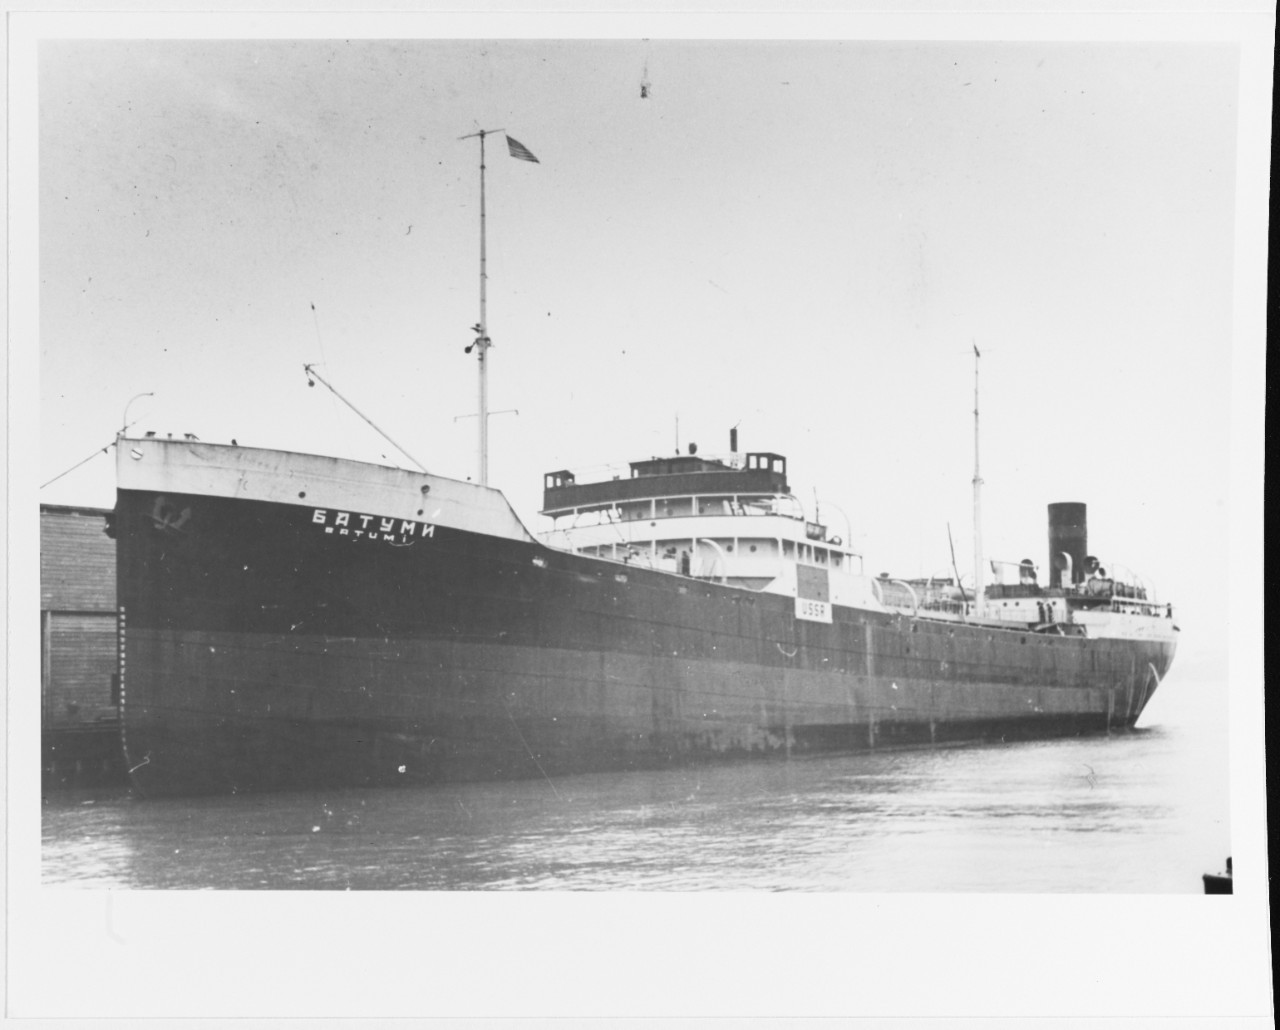 S.S. BATUMI (U.S.S.R. Merchant Tanker, 1932-1972)